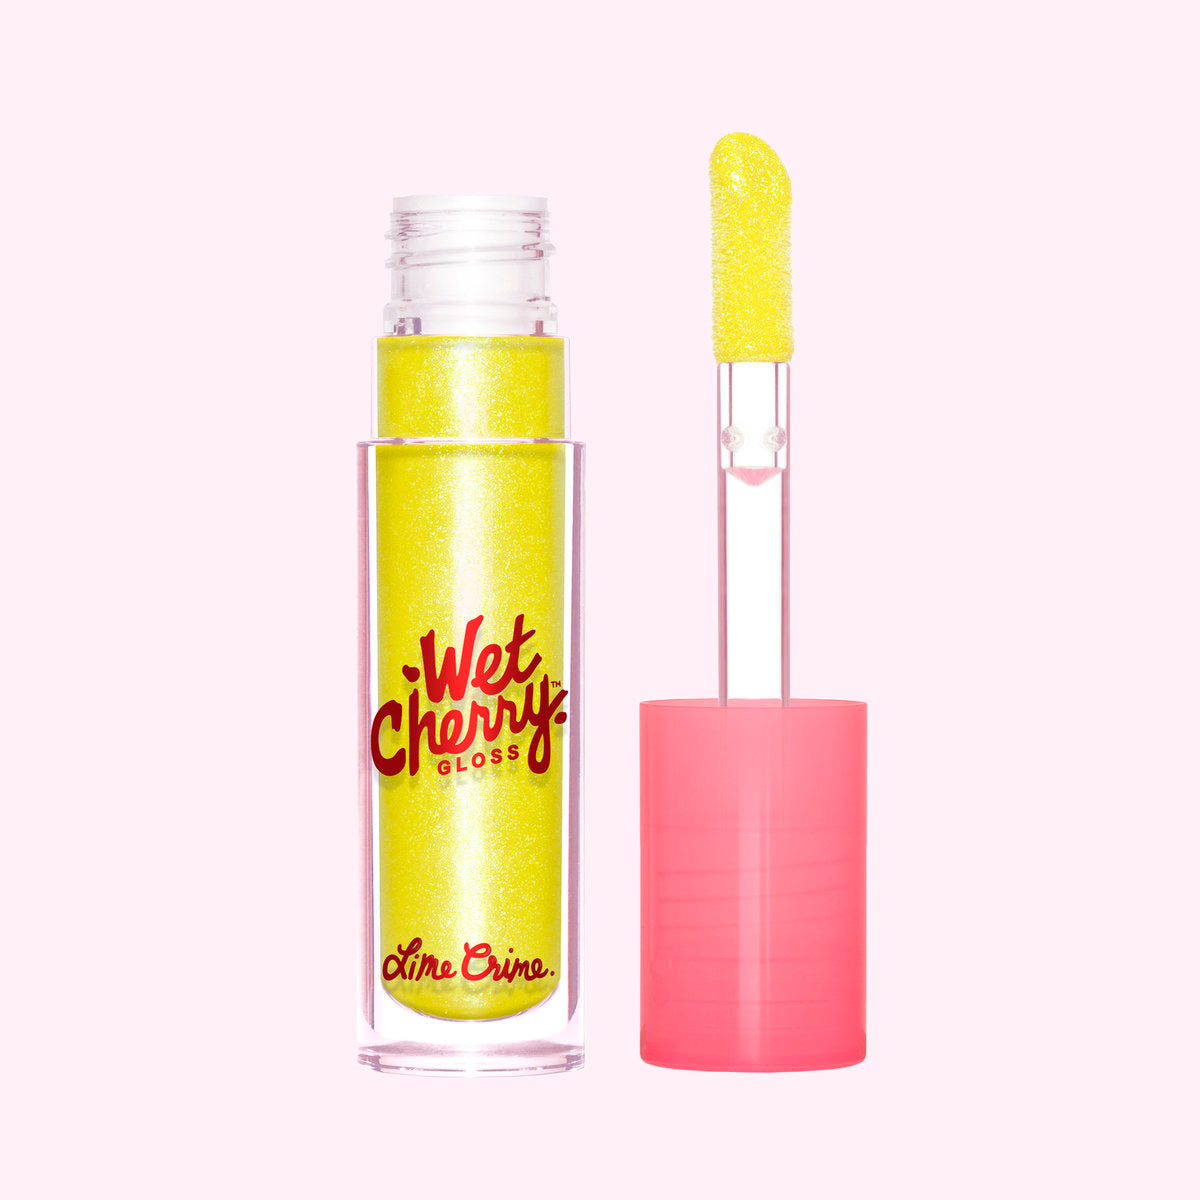 Lime Crime Wet Cherry Gloss - Fluorescent Cherry